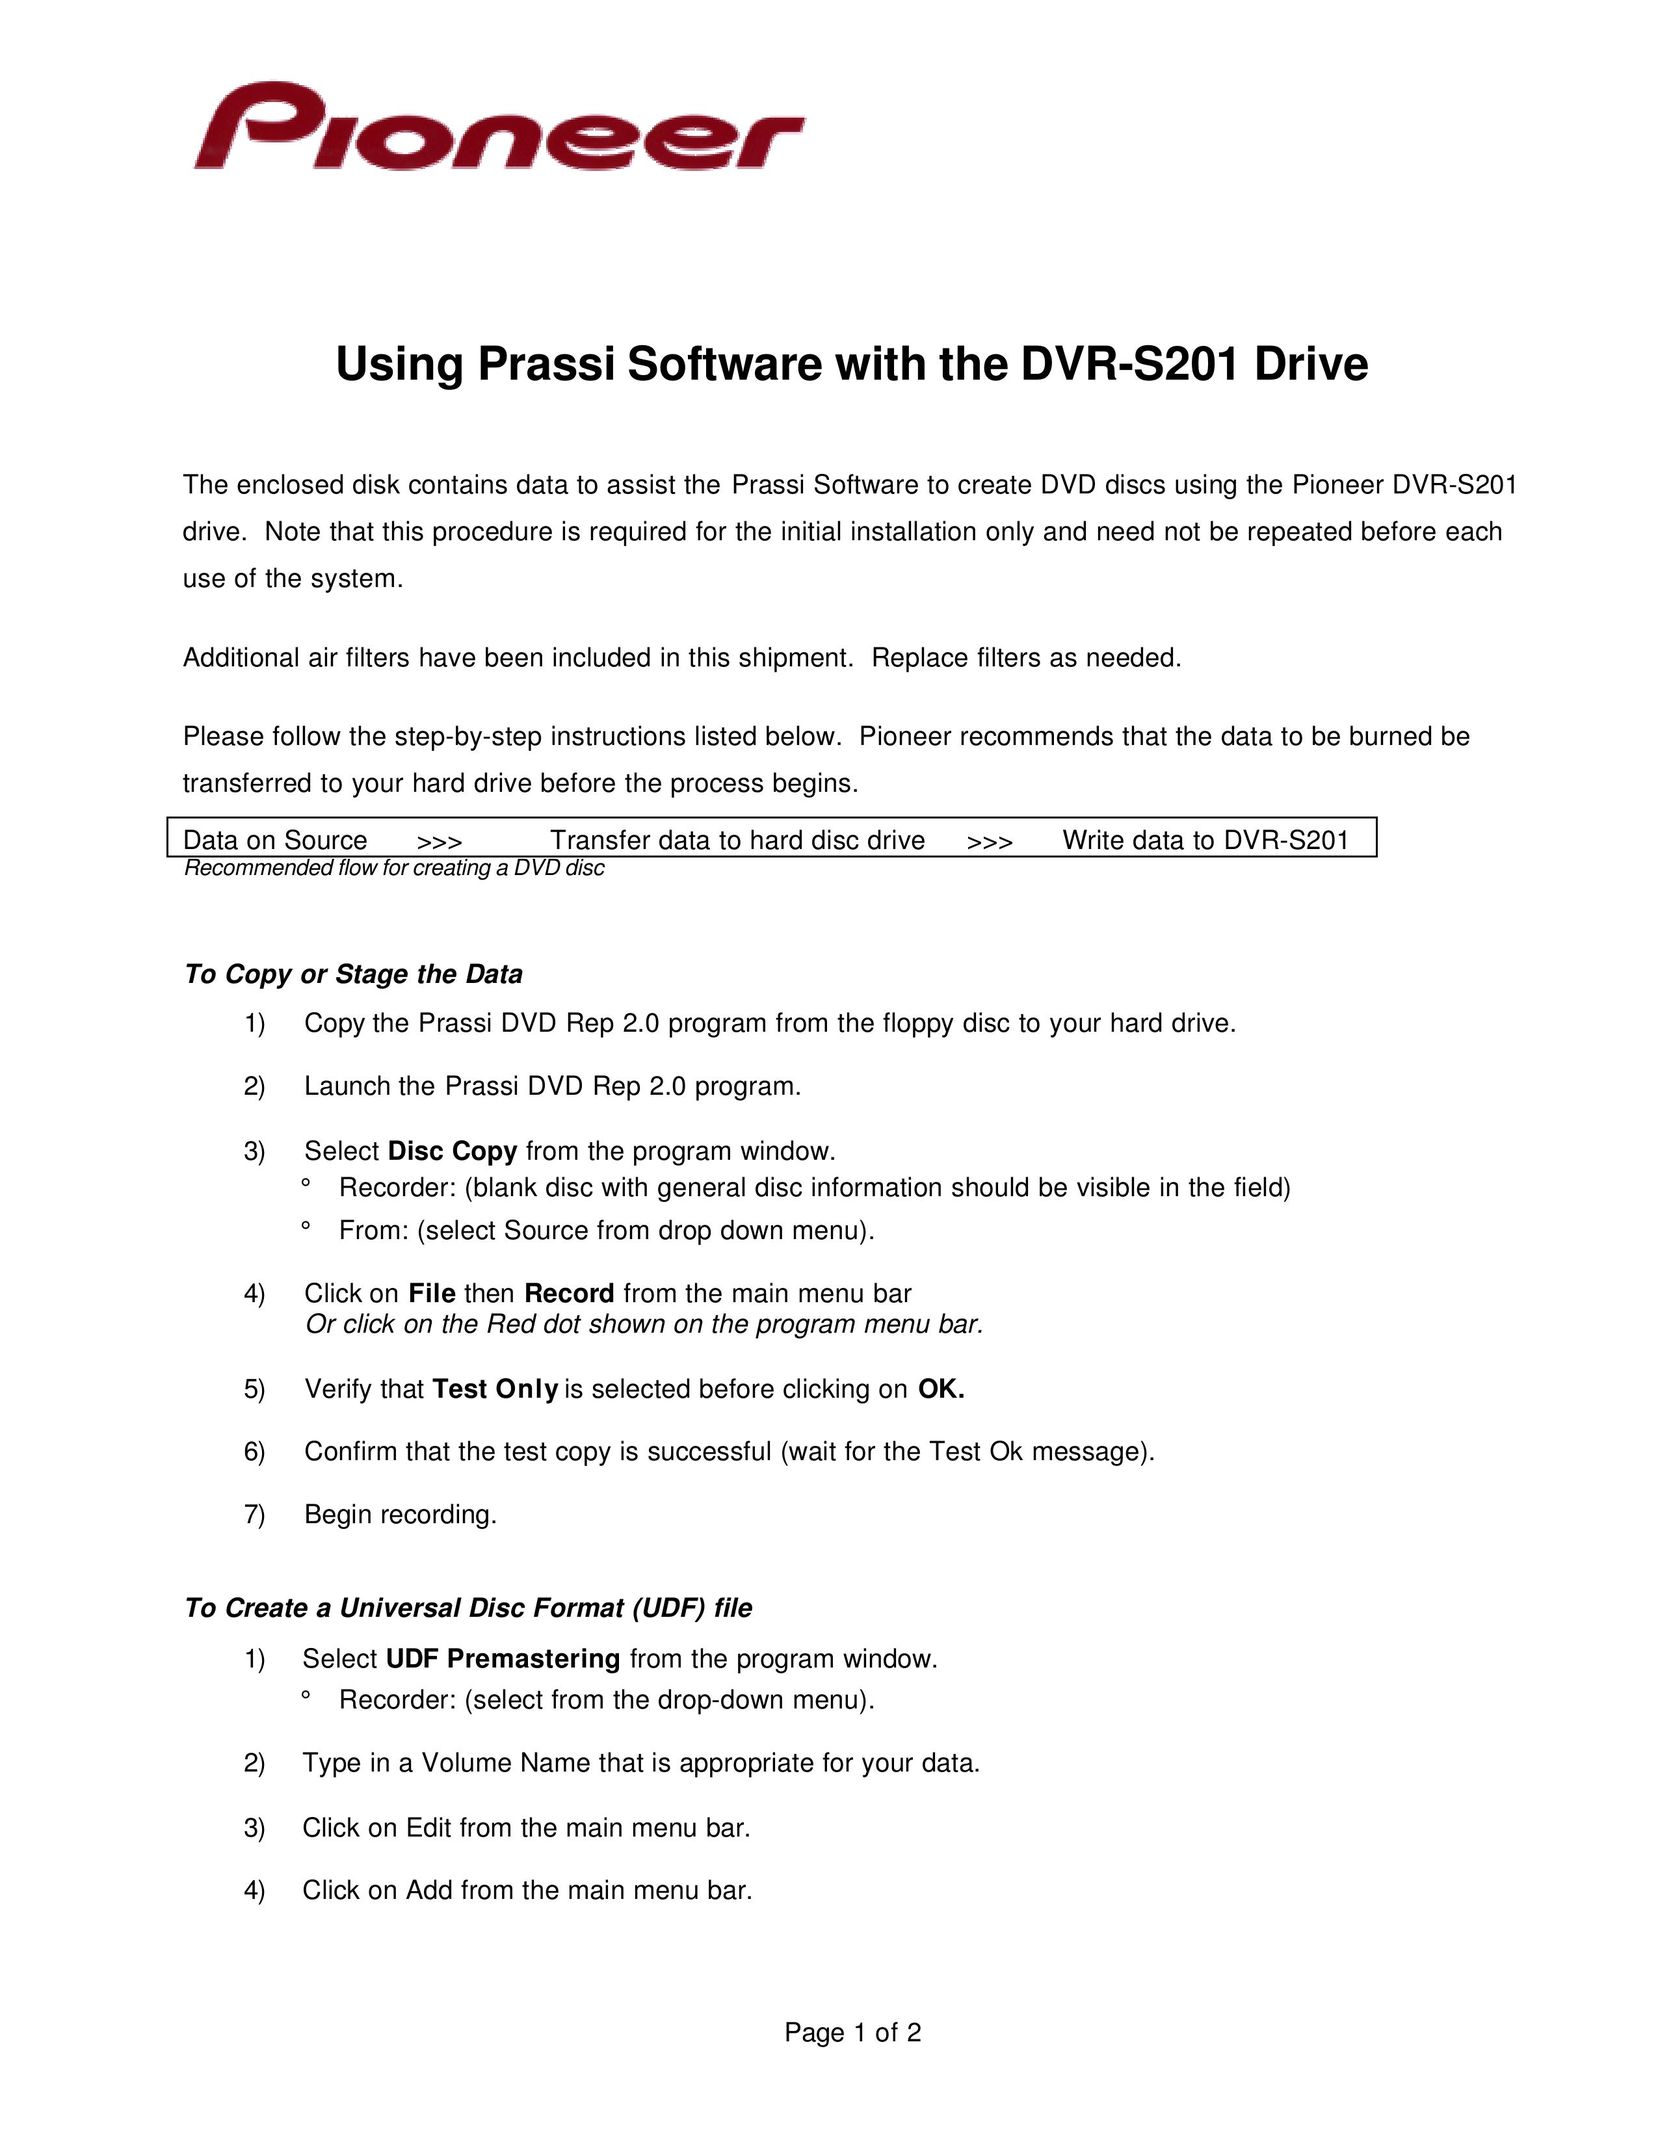 Pioneer DVR-S201 Computer Drive User Manual